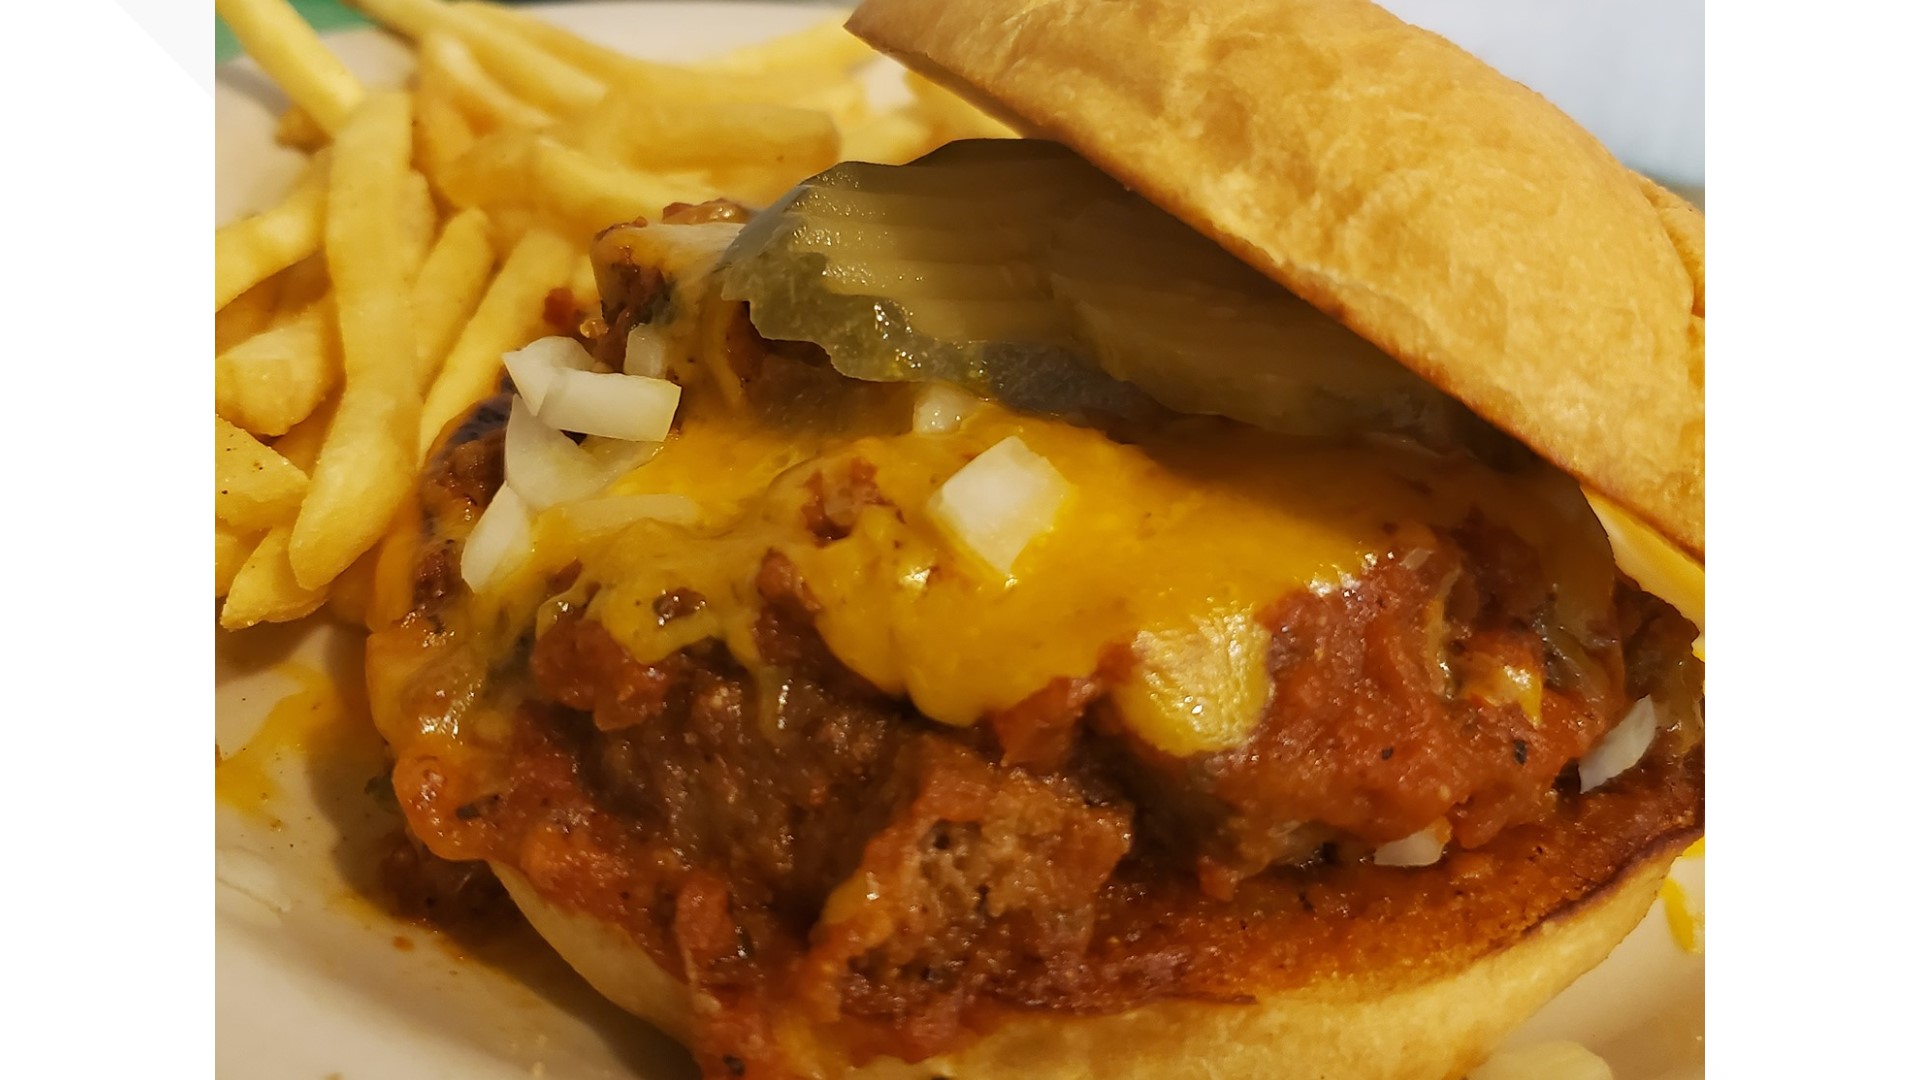 Gallery: 2021 Macon Burger Week burgers | 13wmaz.com